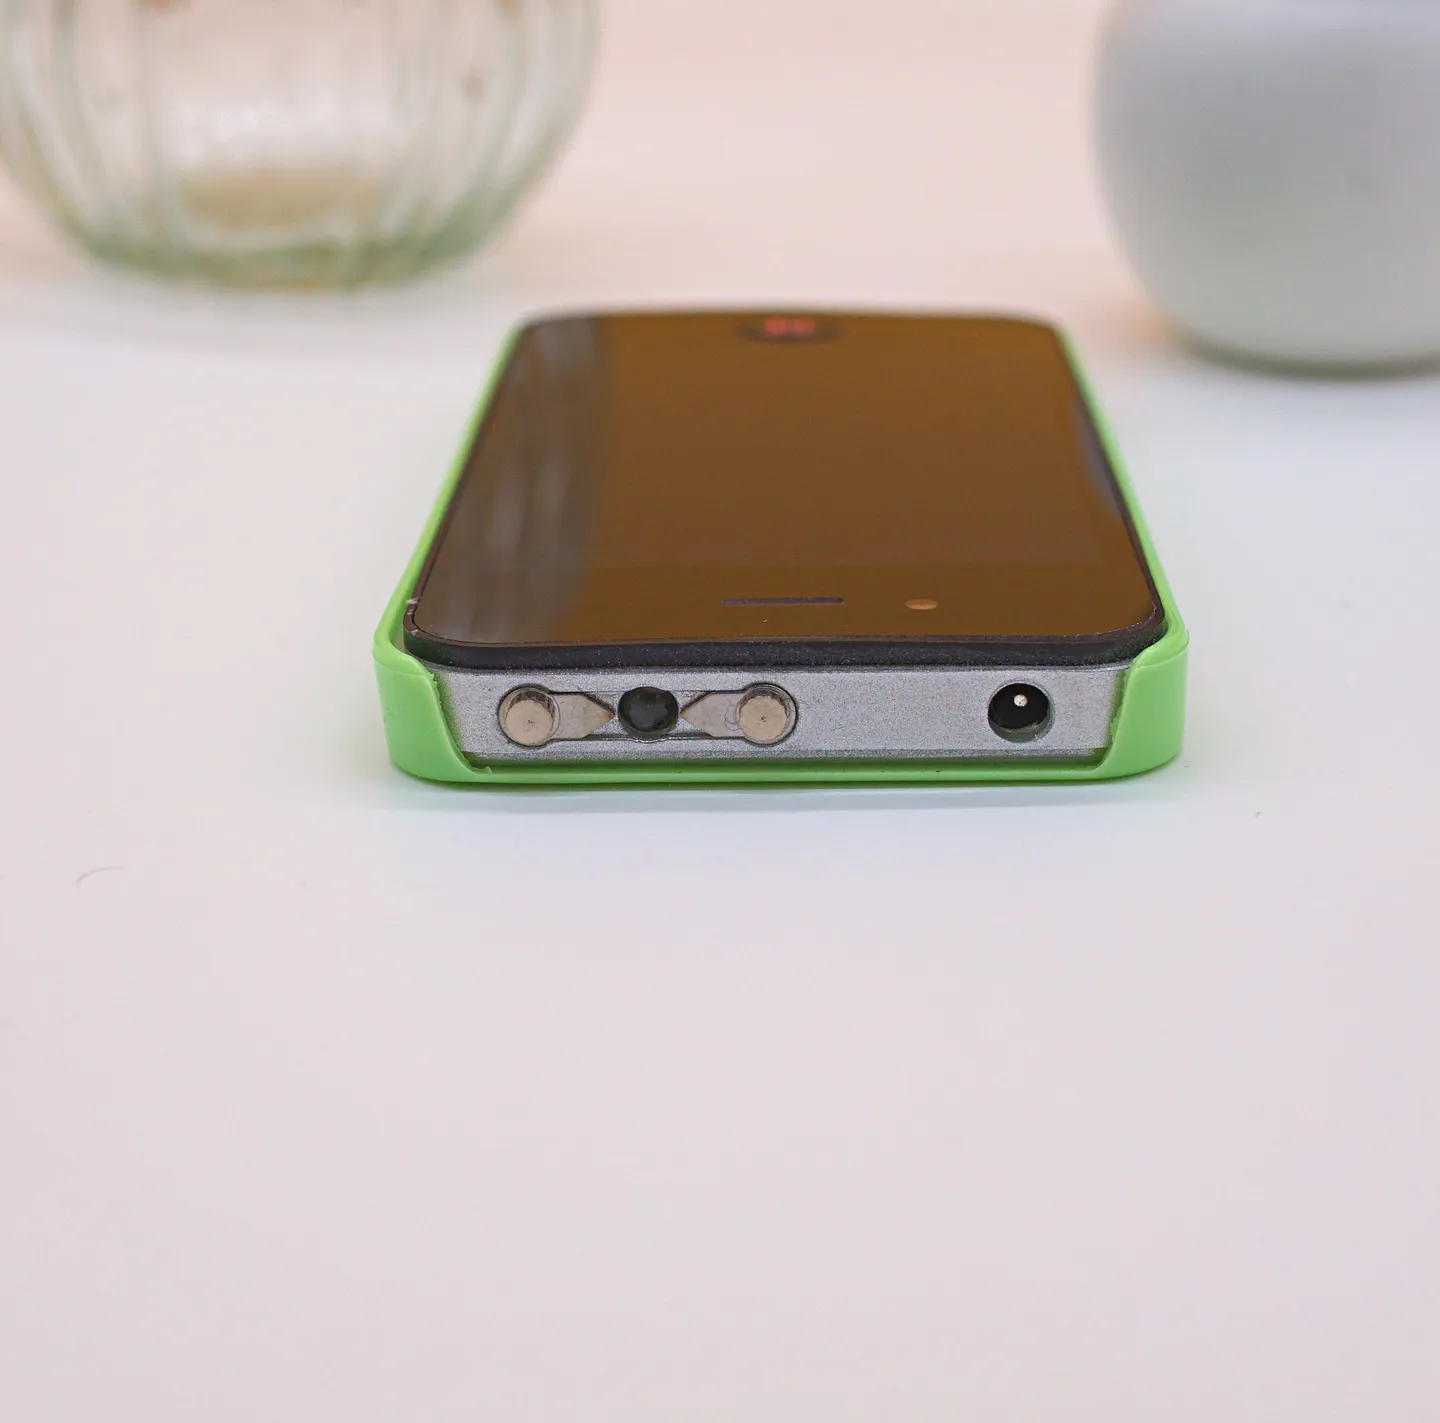 Shocker & Taser - Iphone Shocker Taser, 2 400 000 Voltios, protéjase con discreción (Versión Verde)